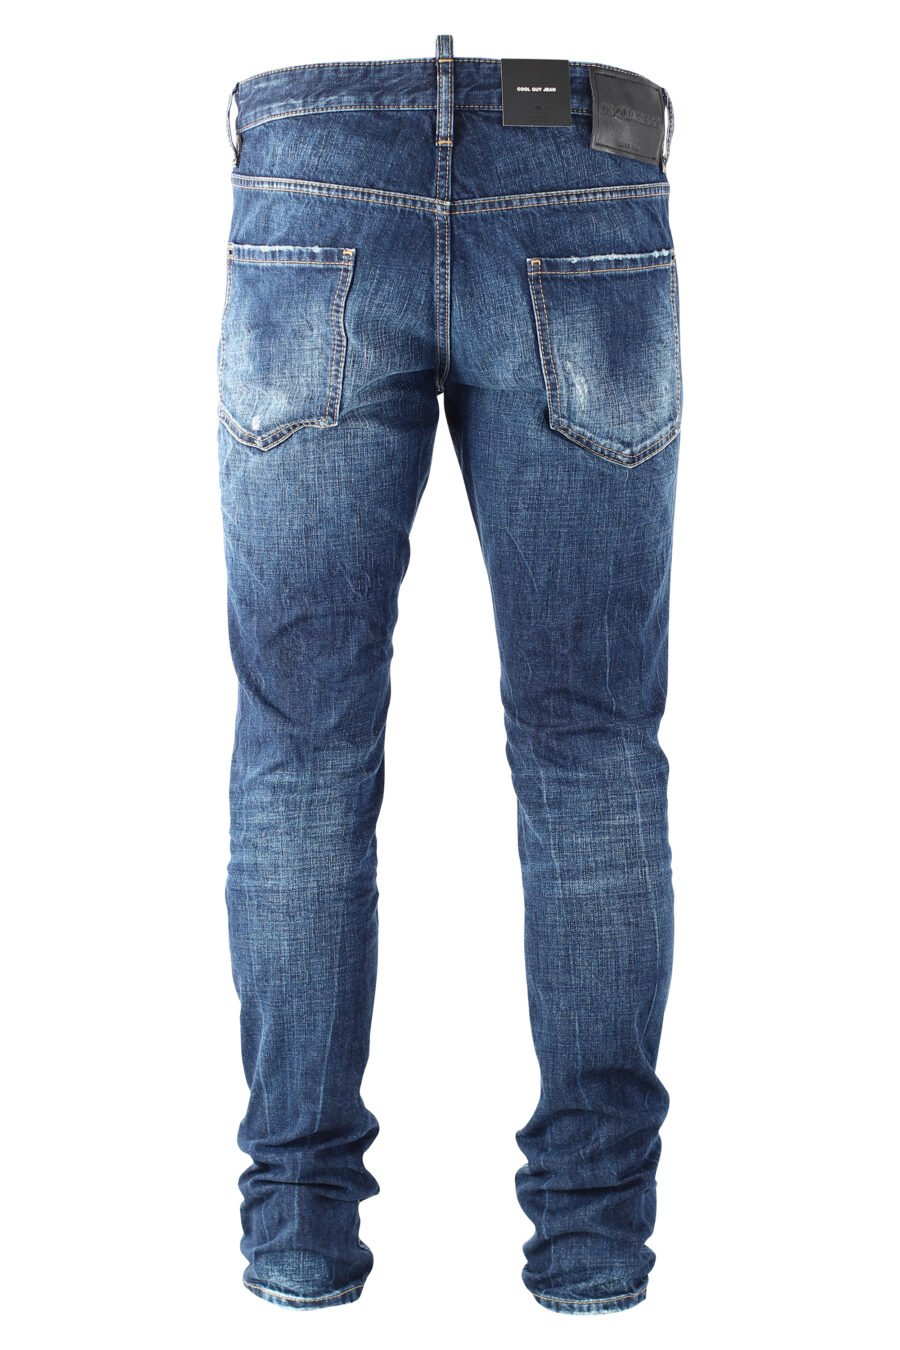 Jeans "cool guy jean" bleu avec logo "D2" noir - IMG 9689